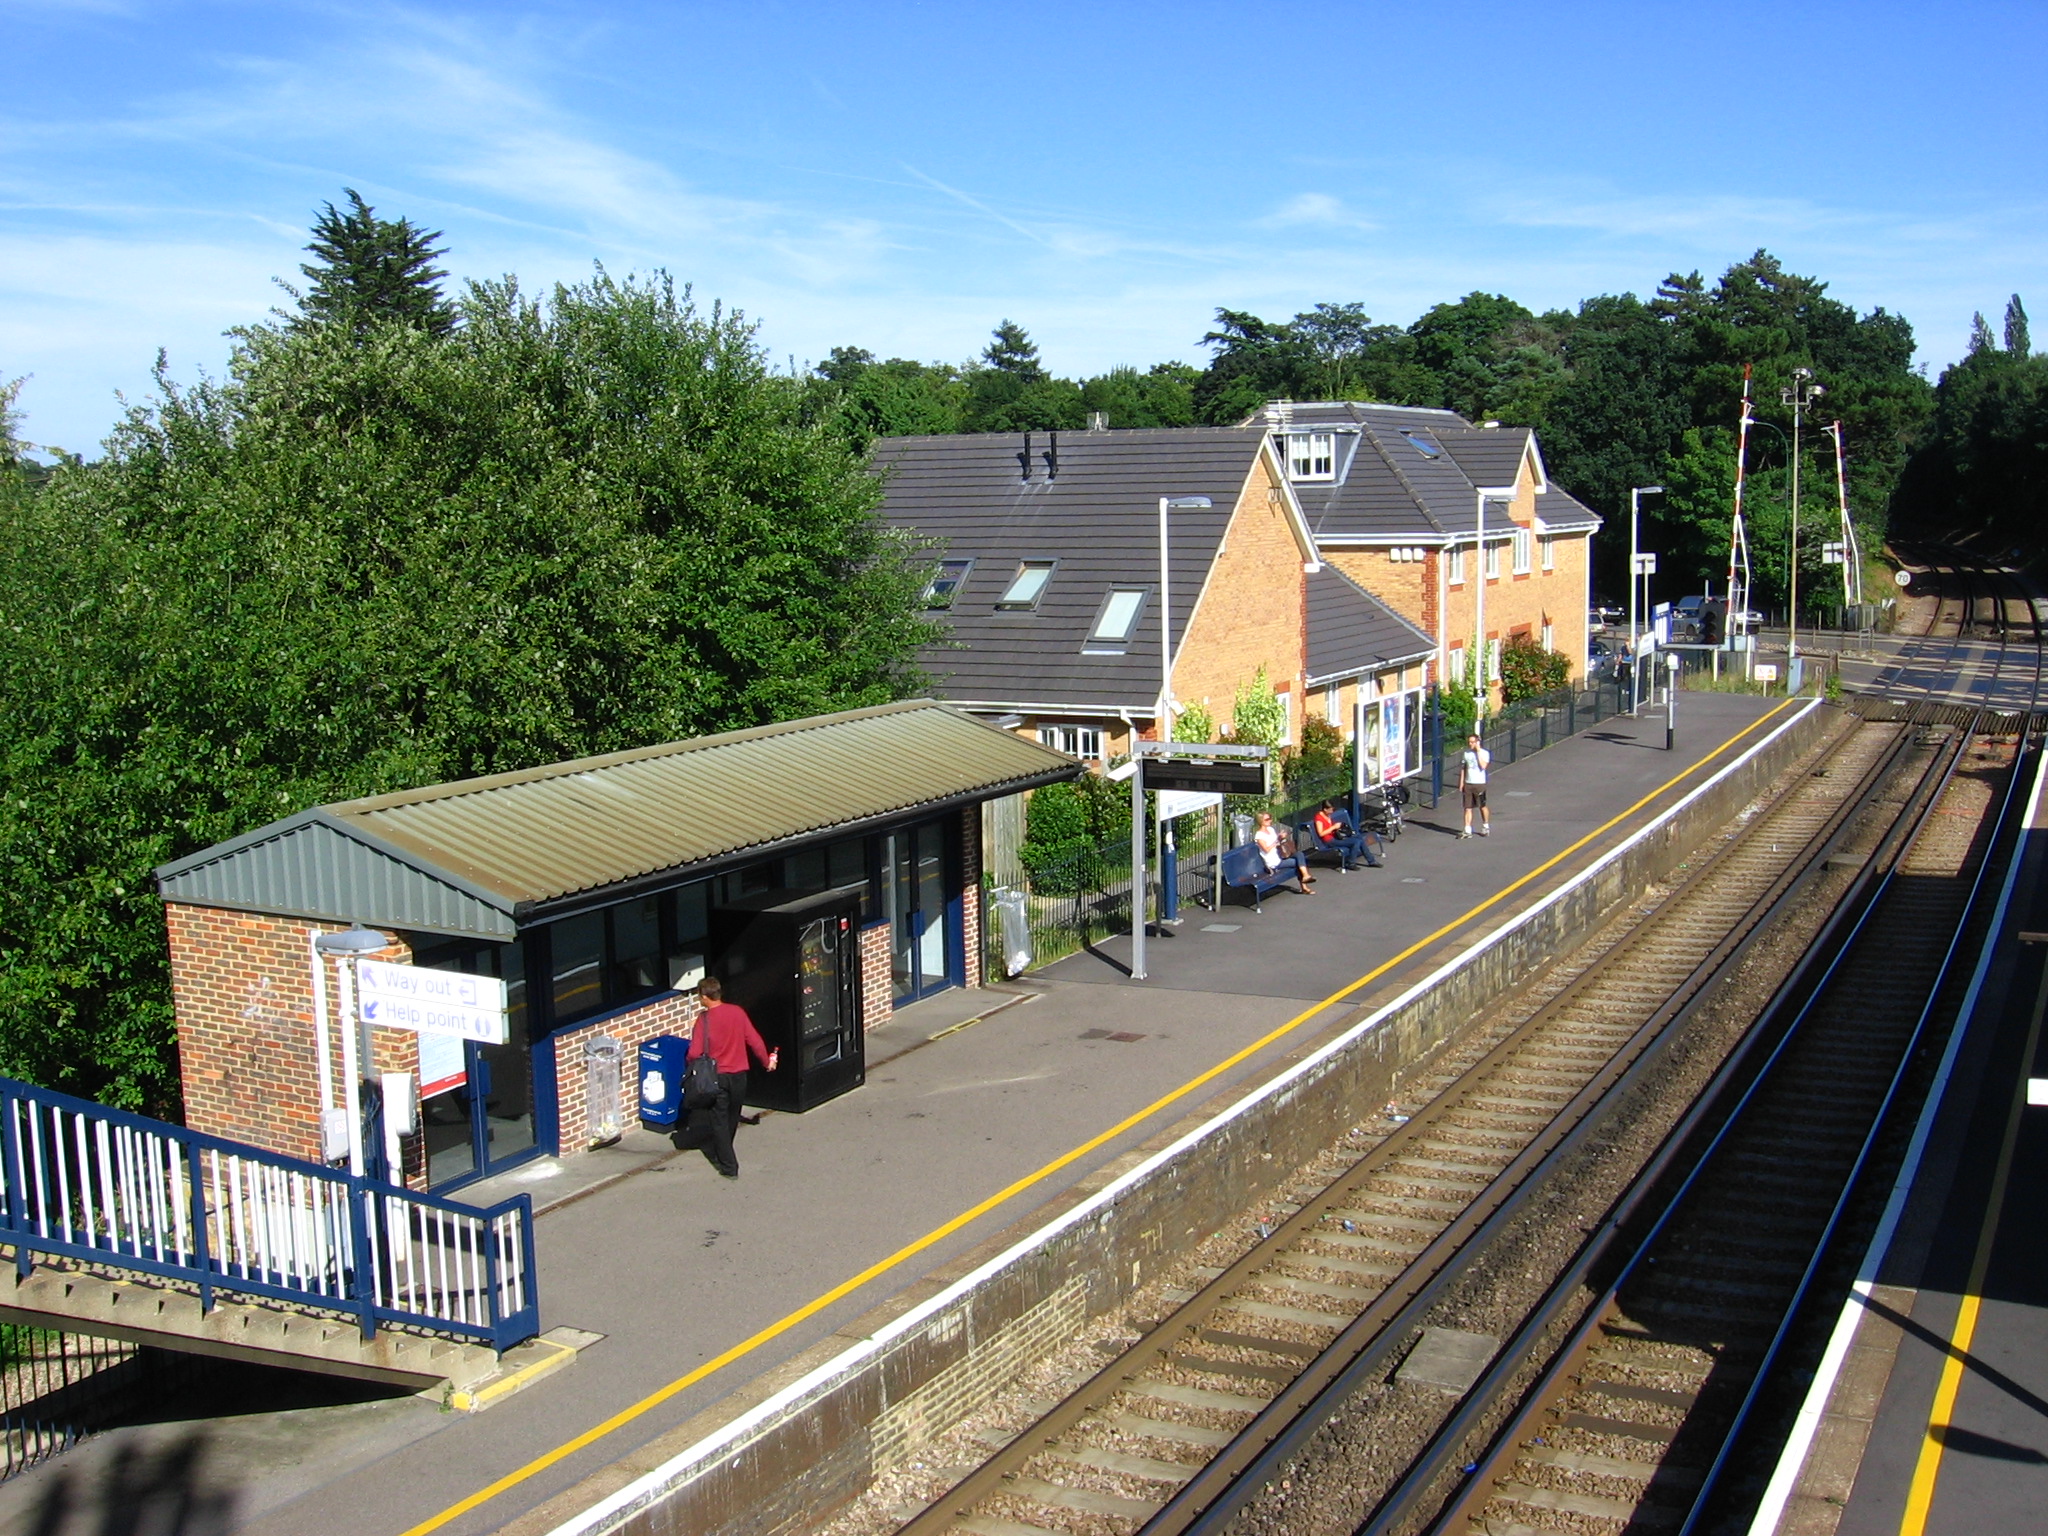 Sunningdale railway station